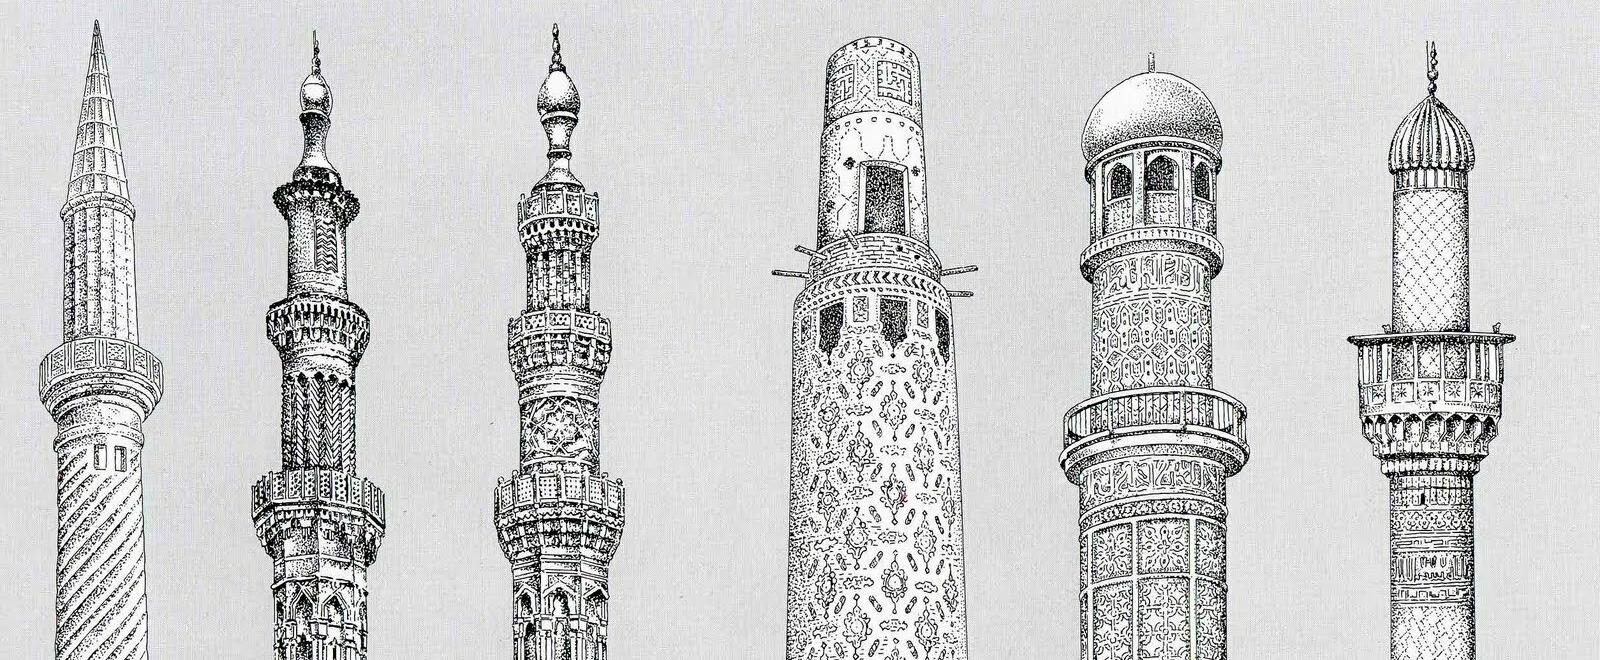 Afnan's View Of Islamic Minarets